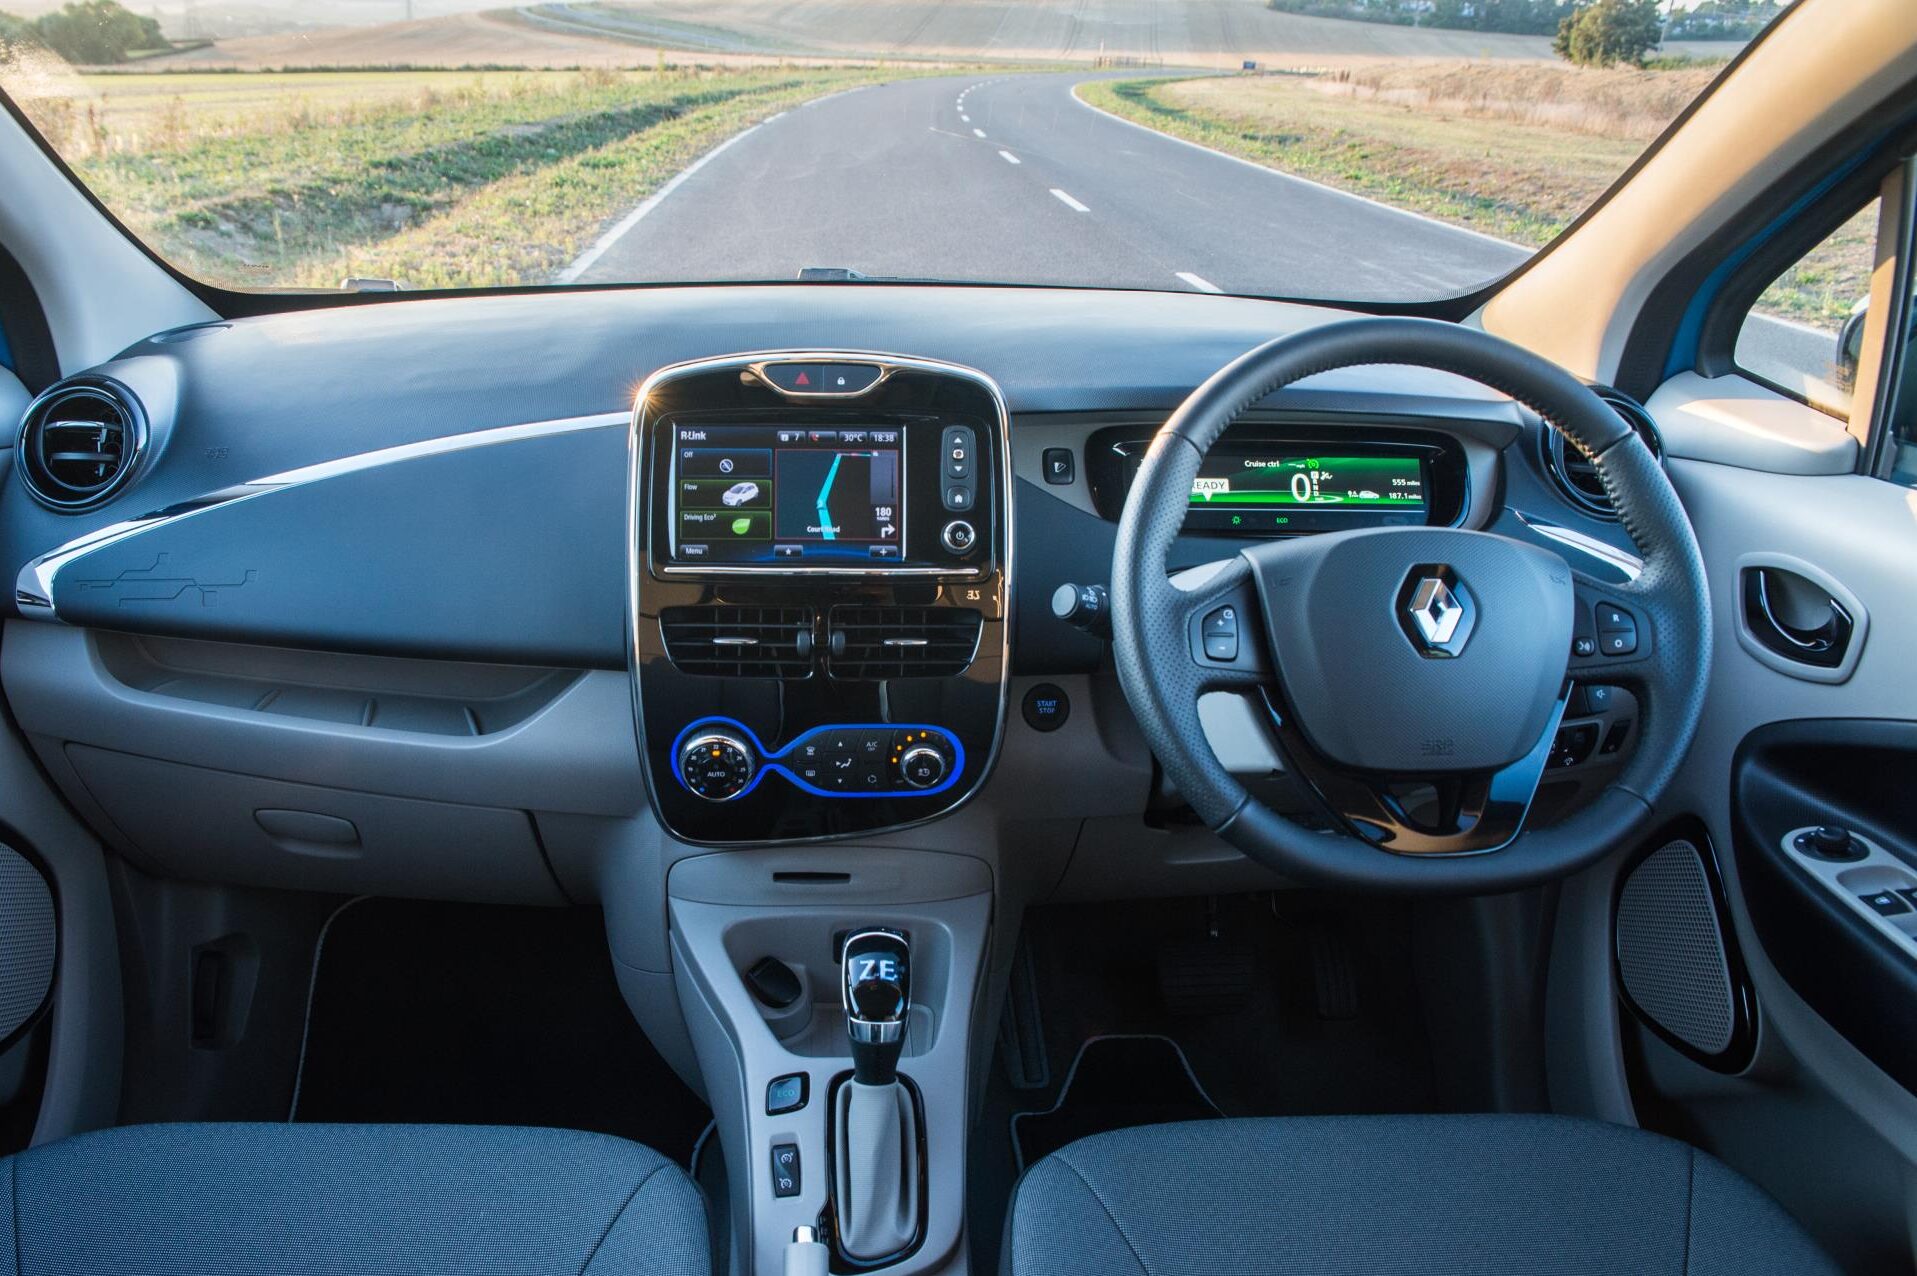 Renault Zoe 2013-2019 interior - EVs Unplugged